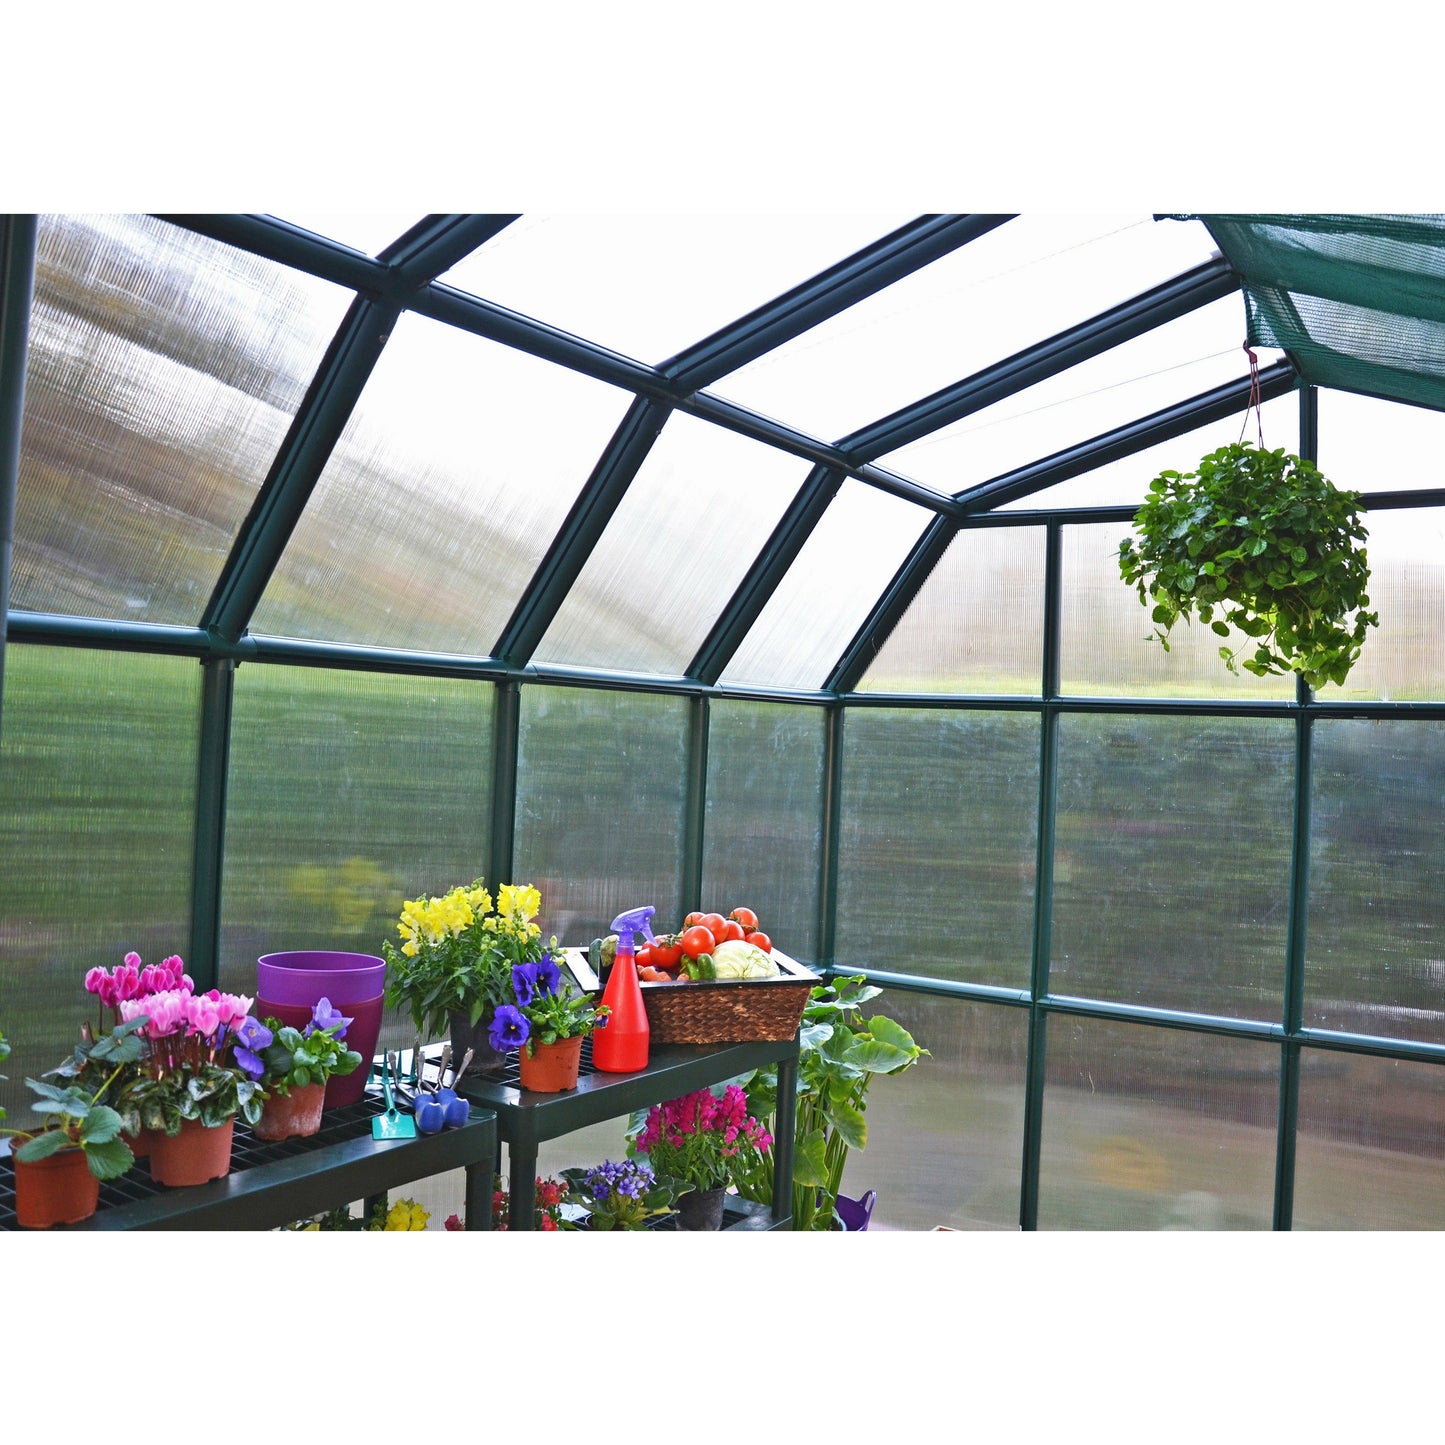 Rion Grand Gardener 8' x 8' Greenhouse - Twin Wall